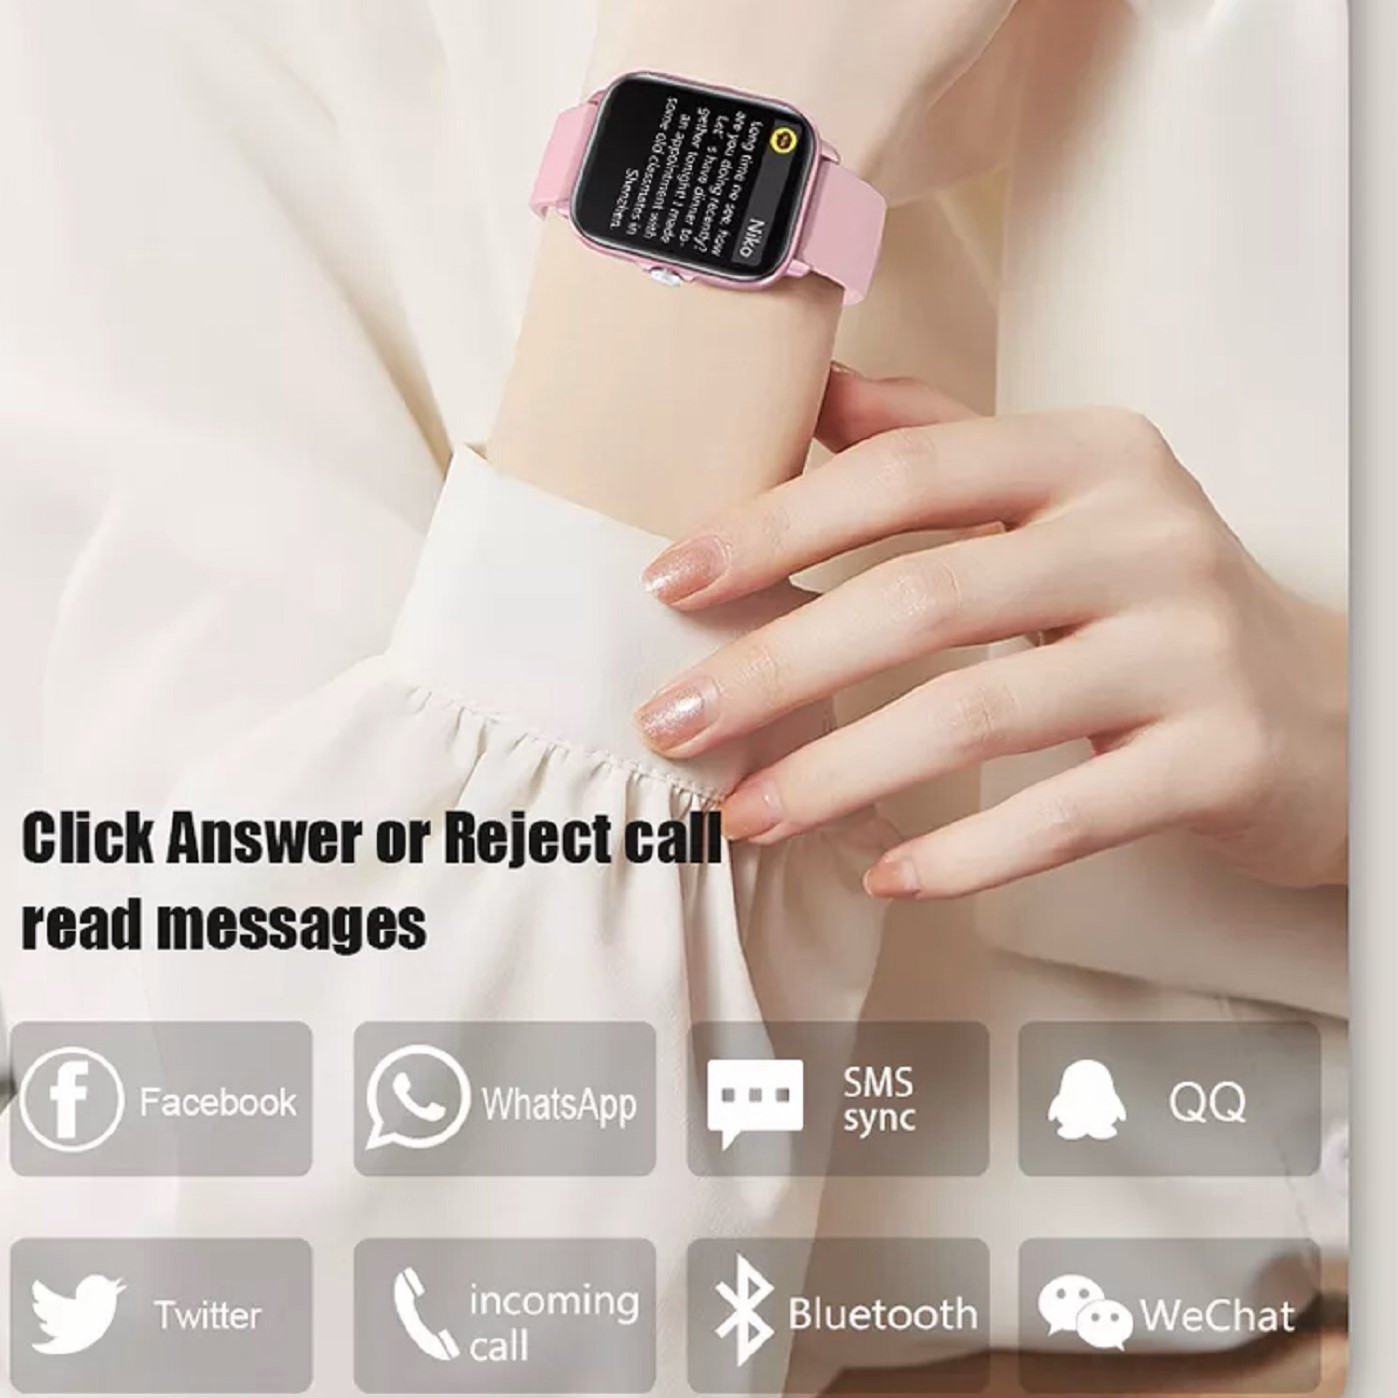 M Smartwatch Silicone, KAREN Y22 Black